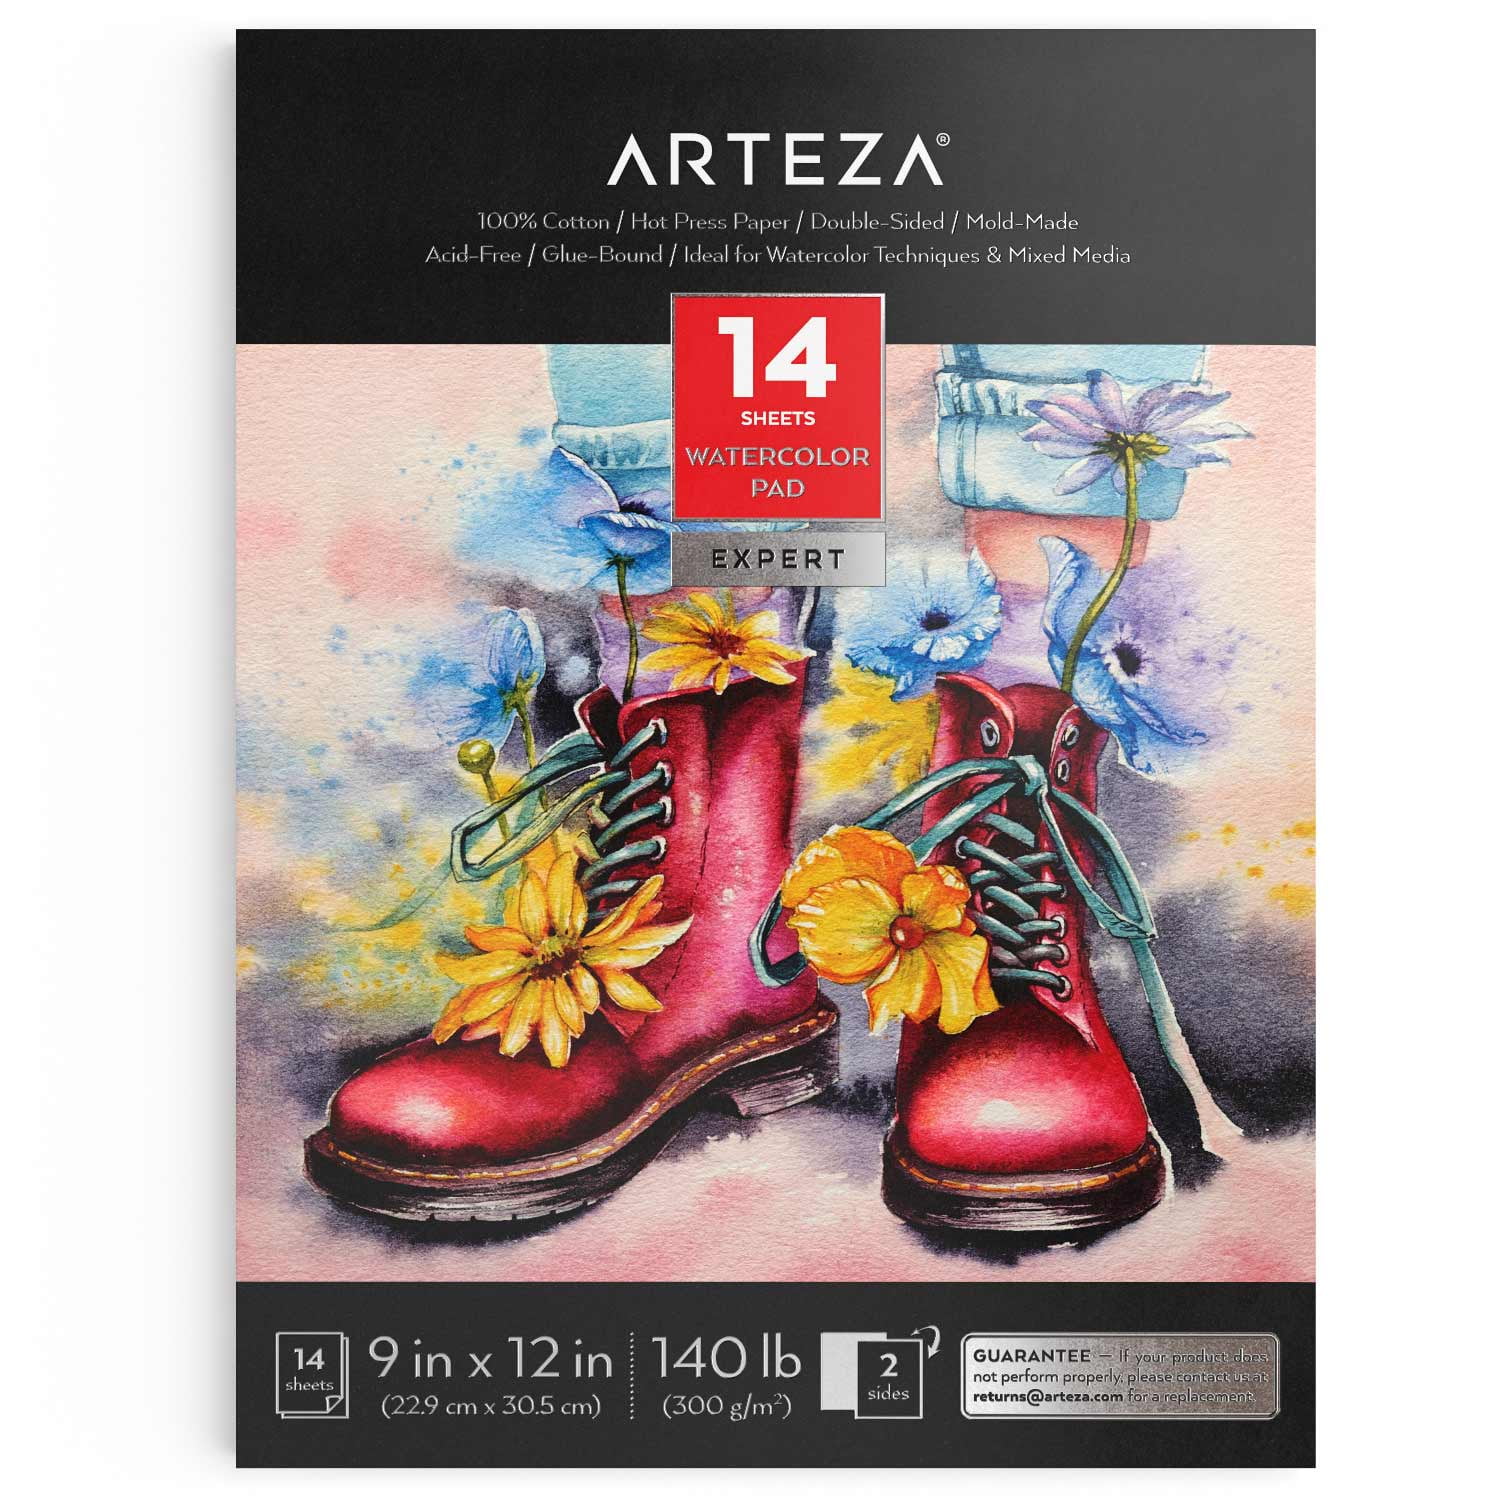 Arteza Expert Watercolor Pad, 5.5 x 8.5, 30 Sheets - Pack of 3